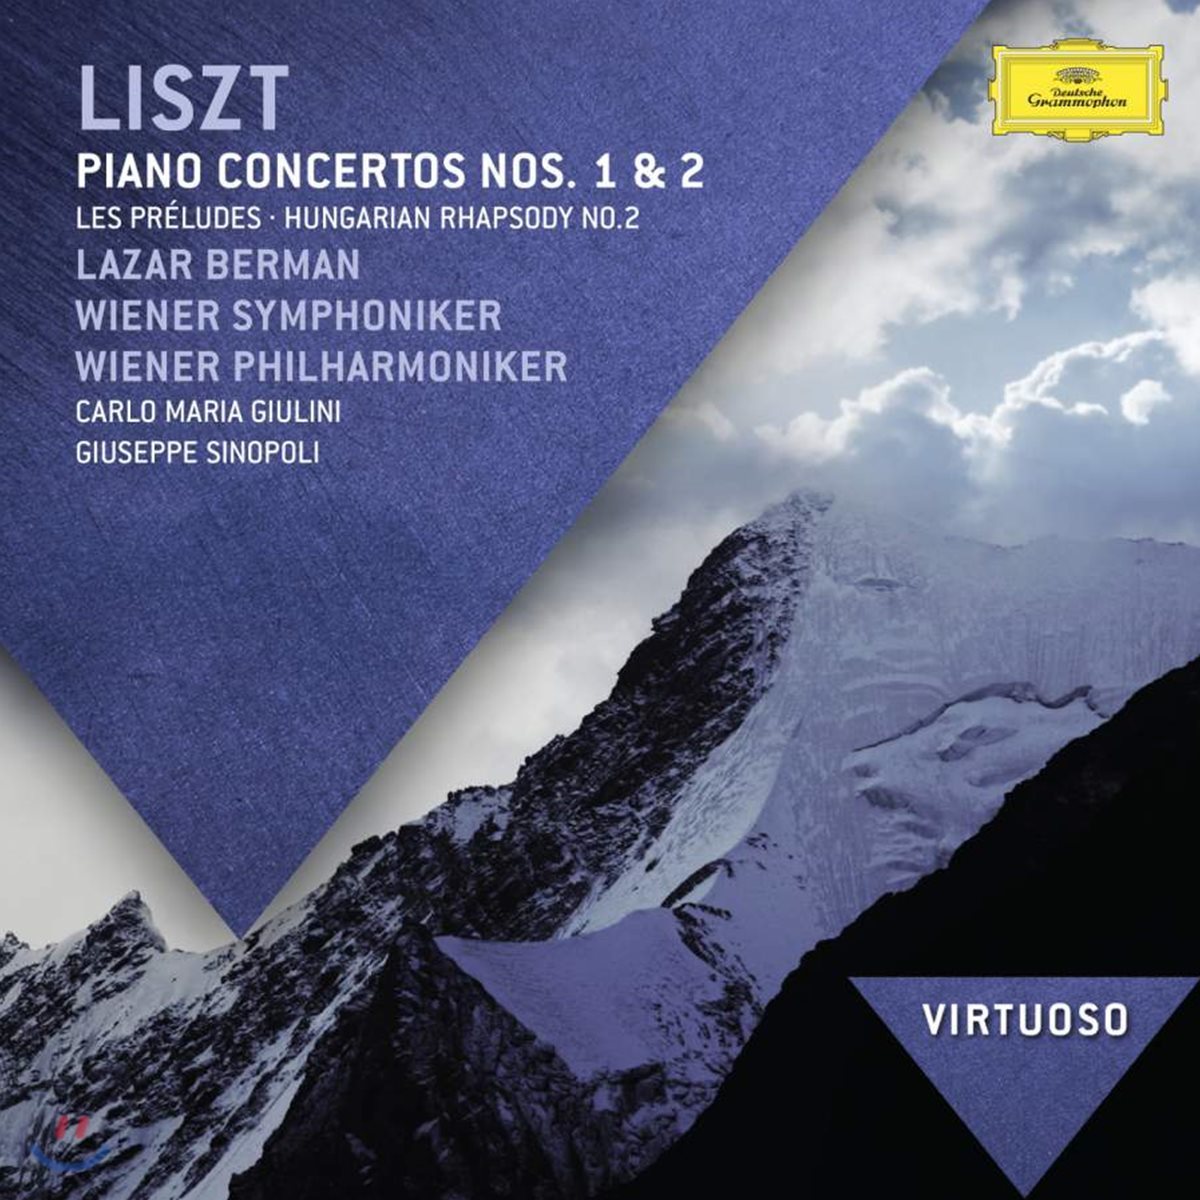 Lazar Berman 리스트: 피아노 협주곡 1, 2번 (Liszt: Piano Concertos S124, 125)